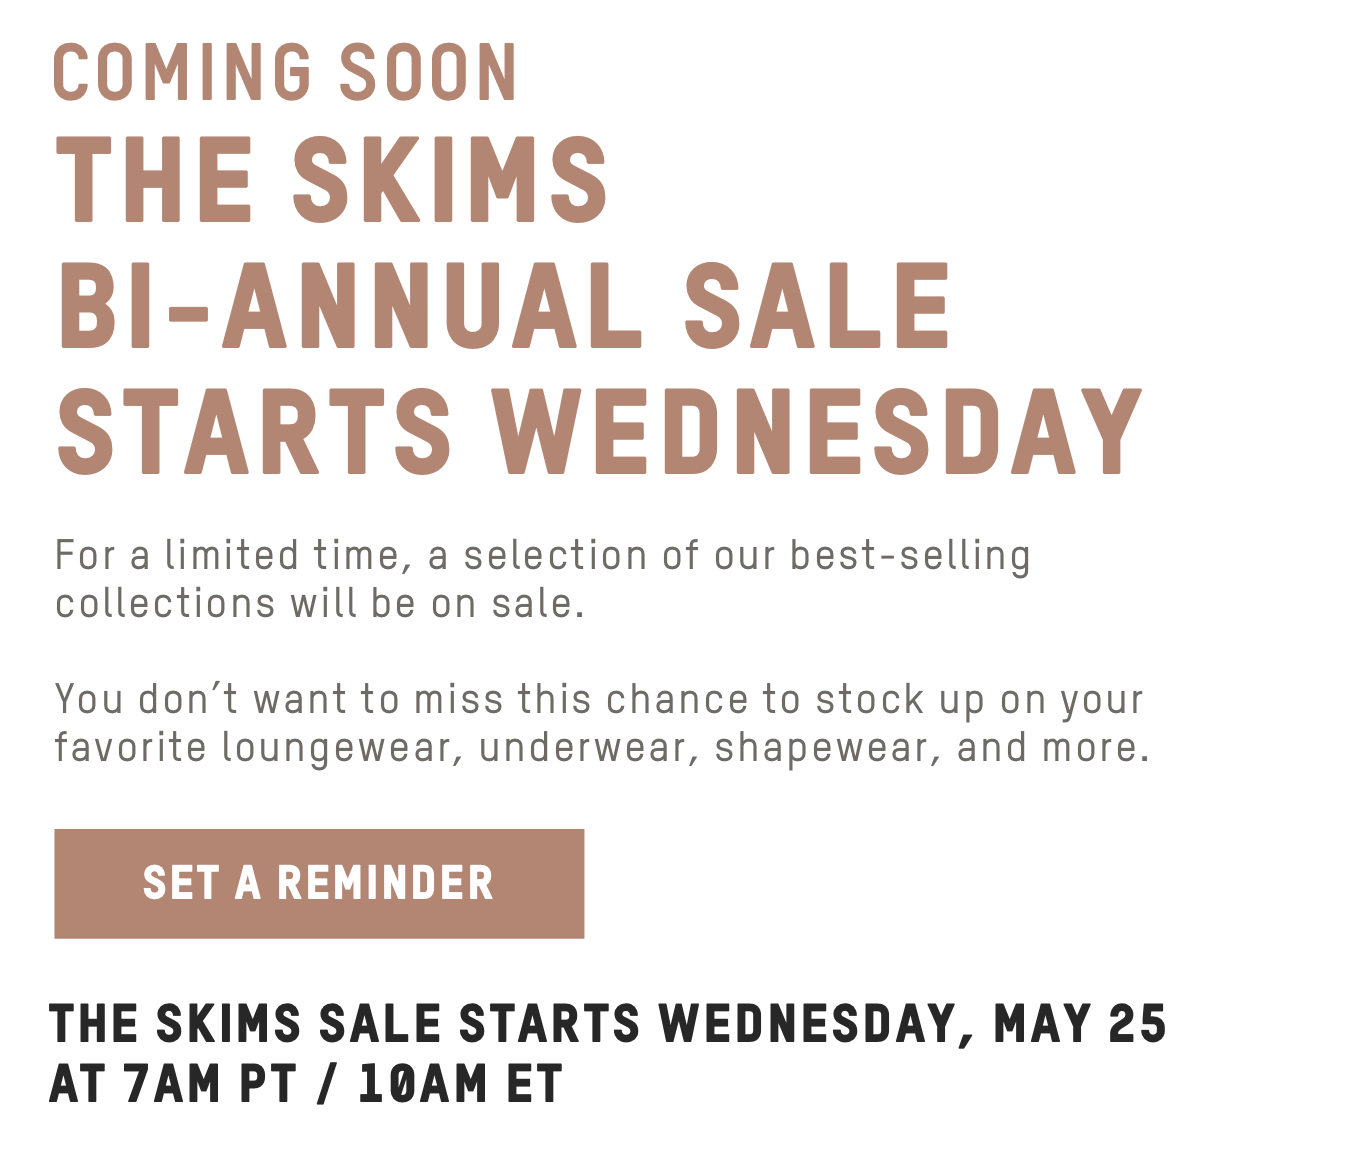 SKIMS: The SKIMS Bi-Annual Sale is Coming Soon